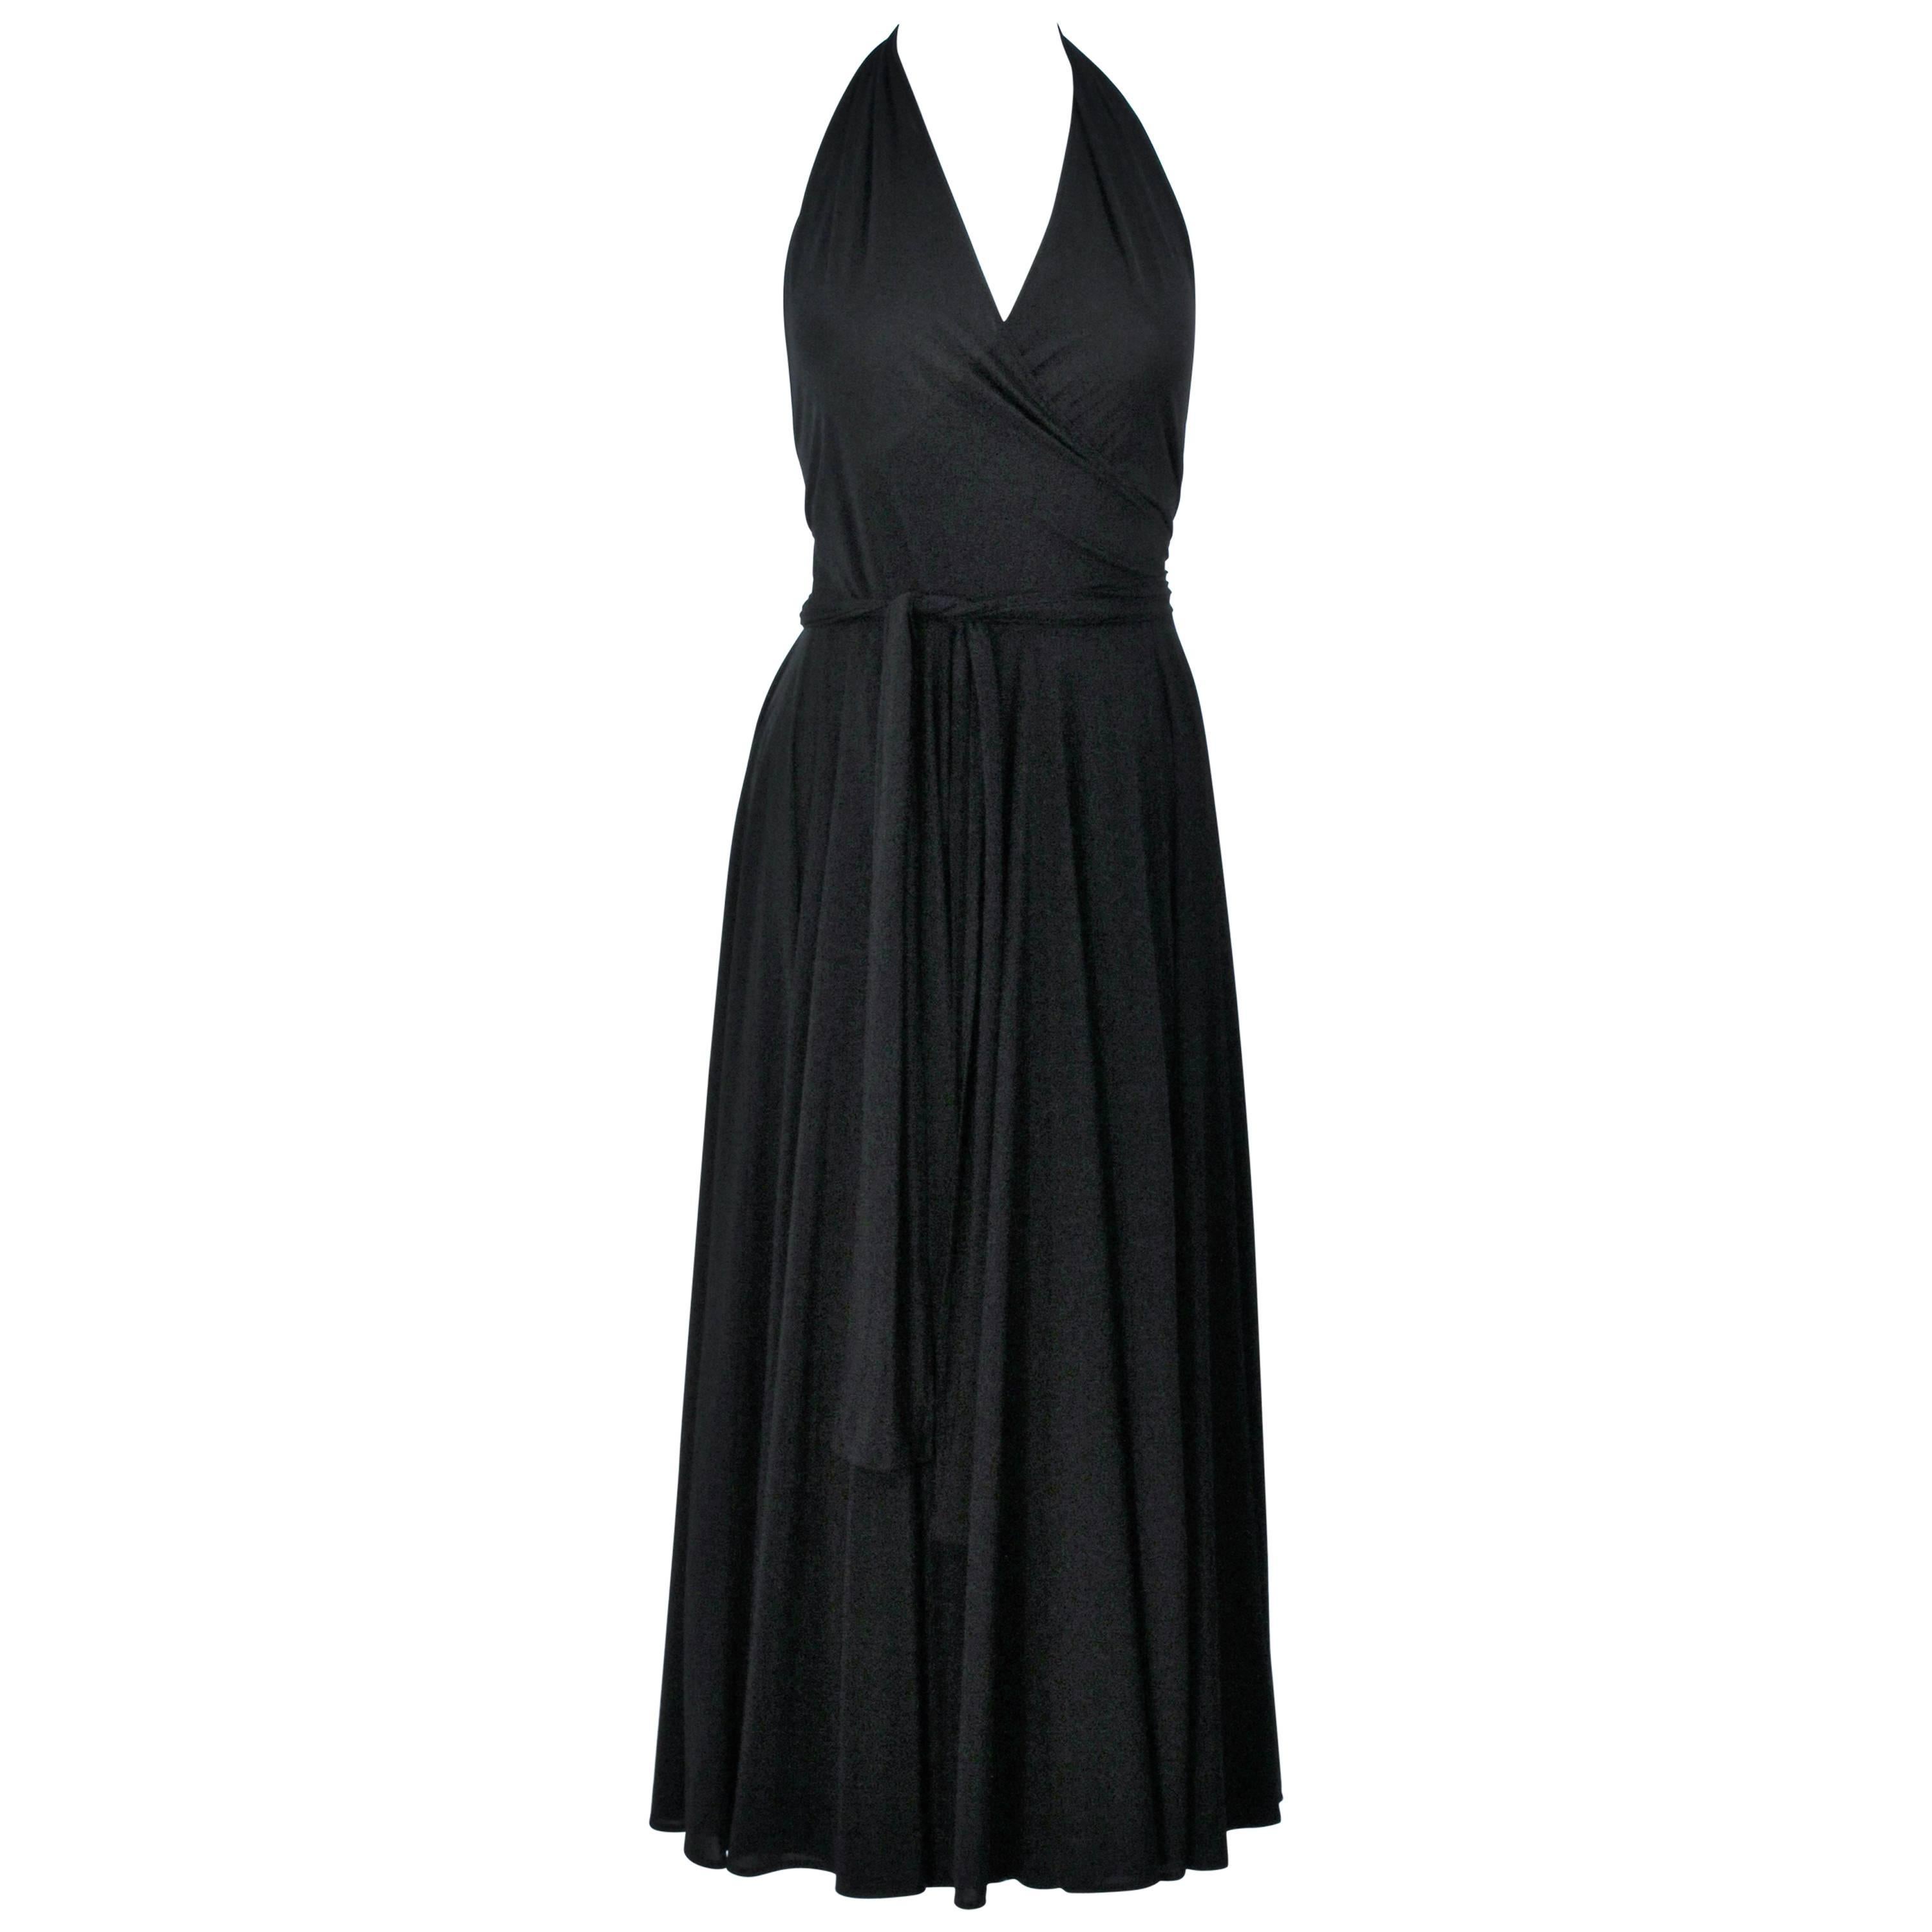 NORMA KAMALI Black Wrap Style Halter Dress Size Small